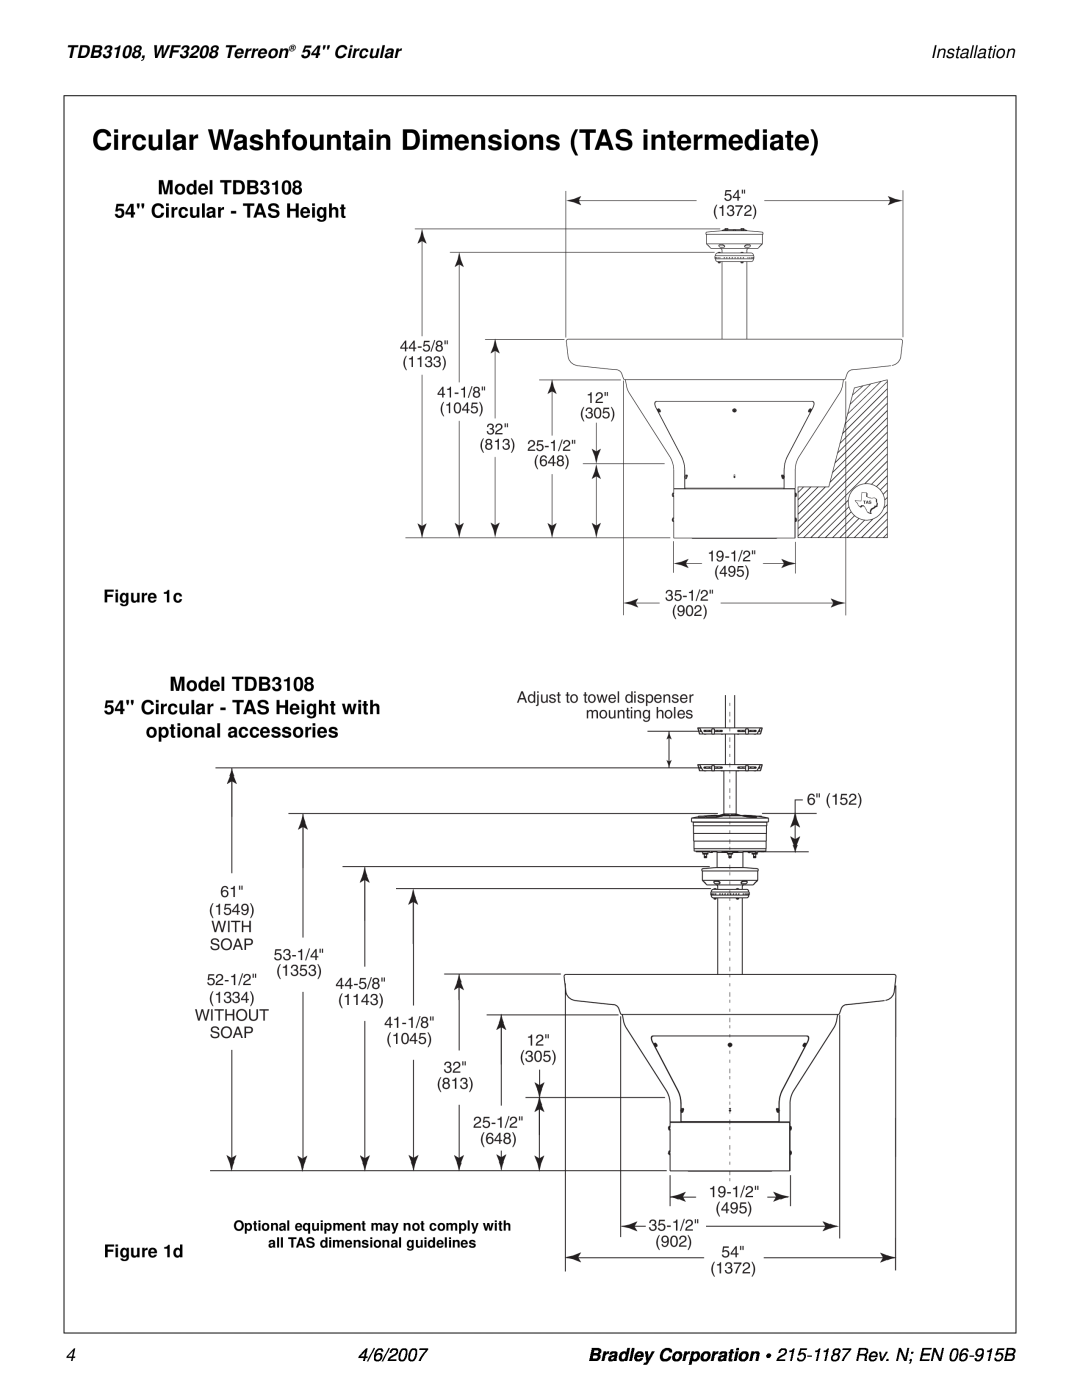 Bradley Smoker Circular Washfountain Dimensions TAS intermediate, Model TDB3108 54 Circular - TAS Height, Installation 